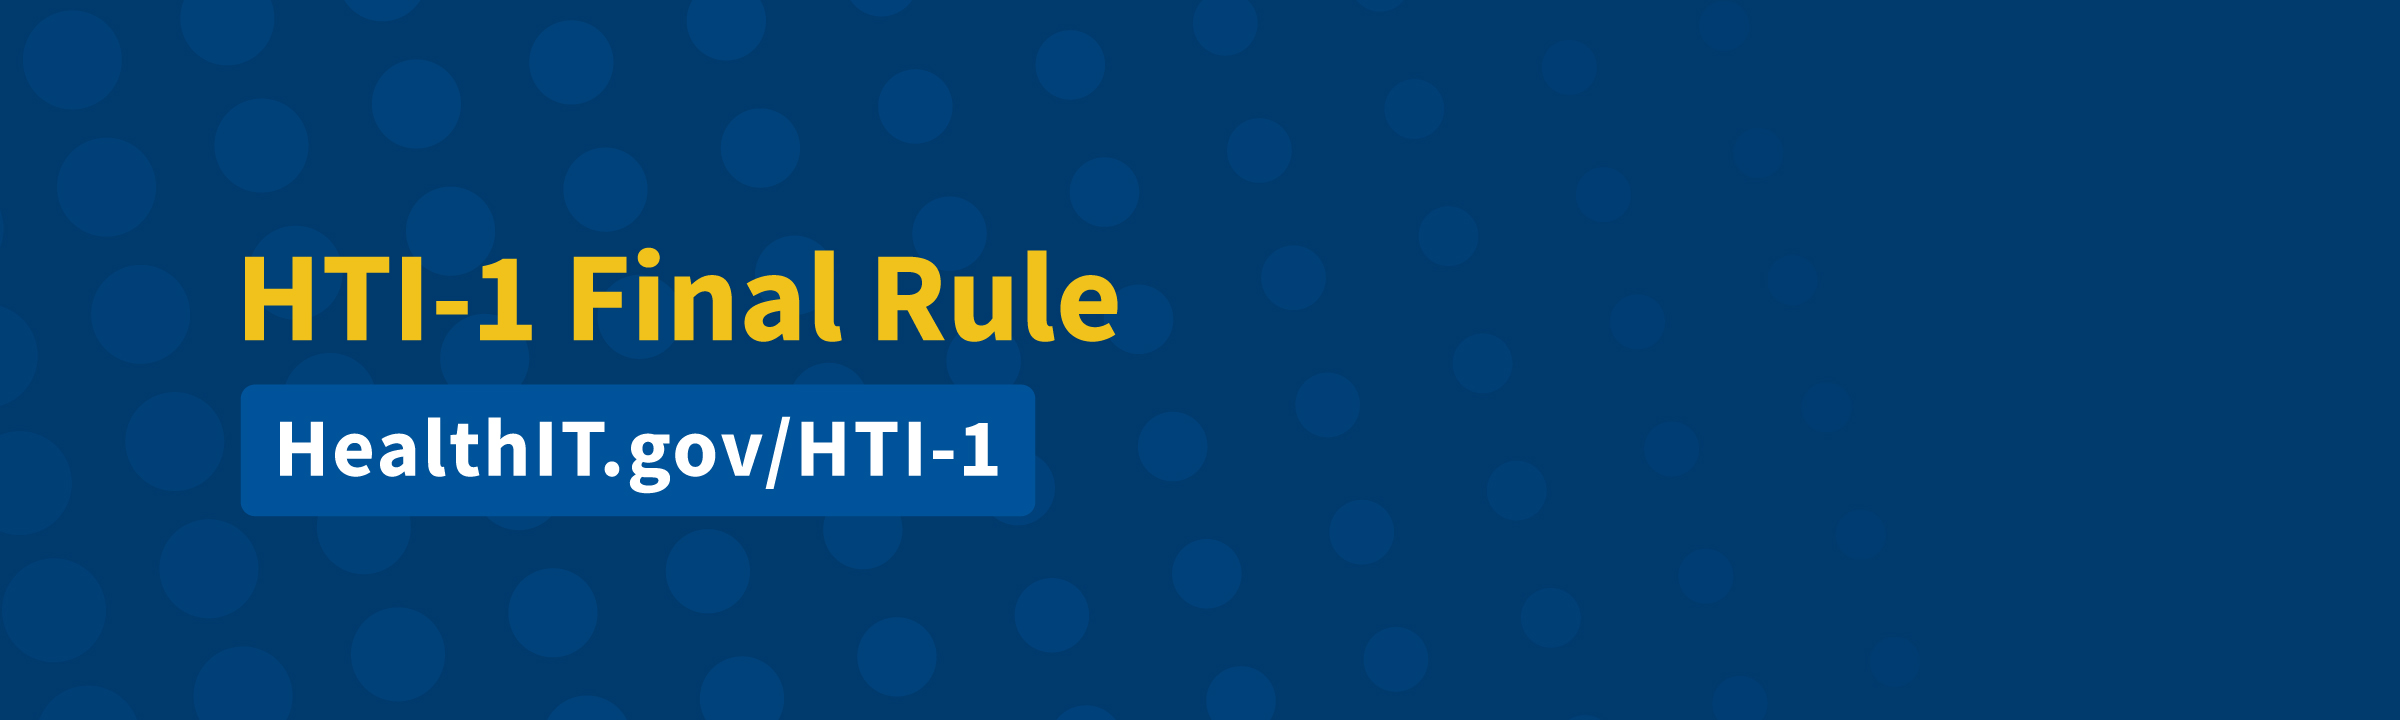 HTI-1 Final Rule